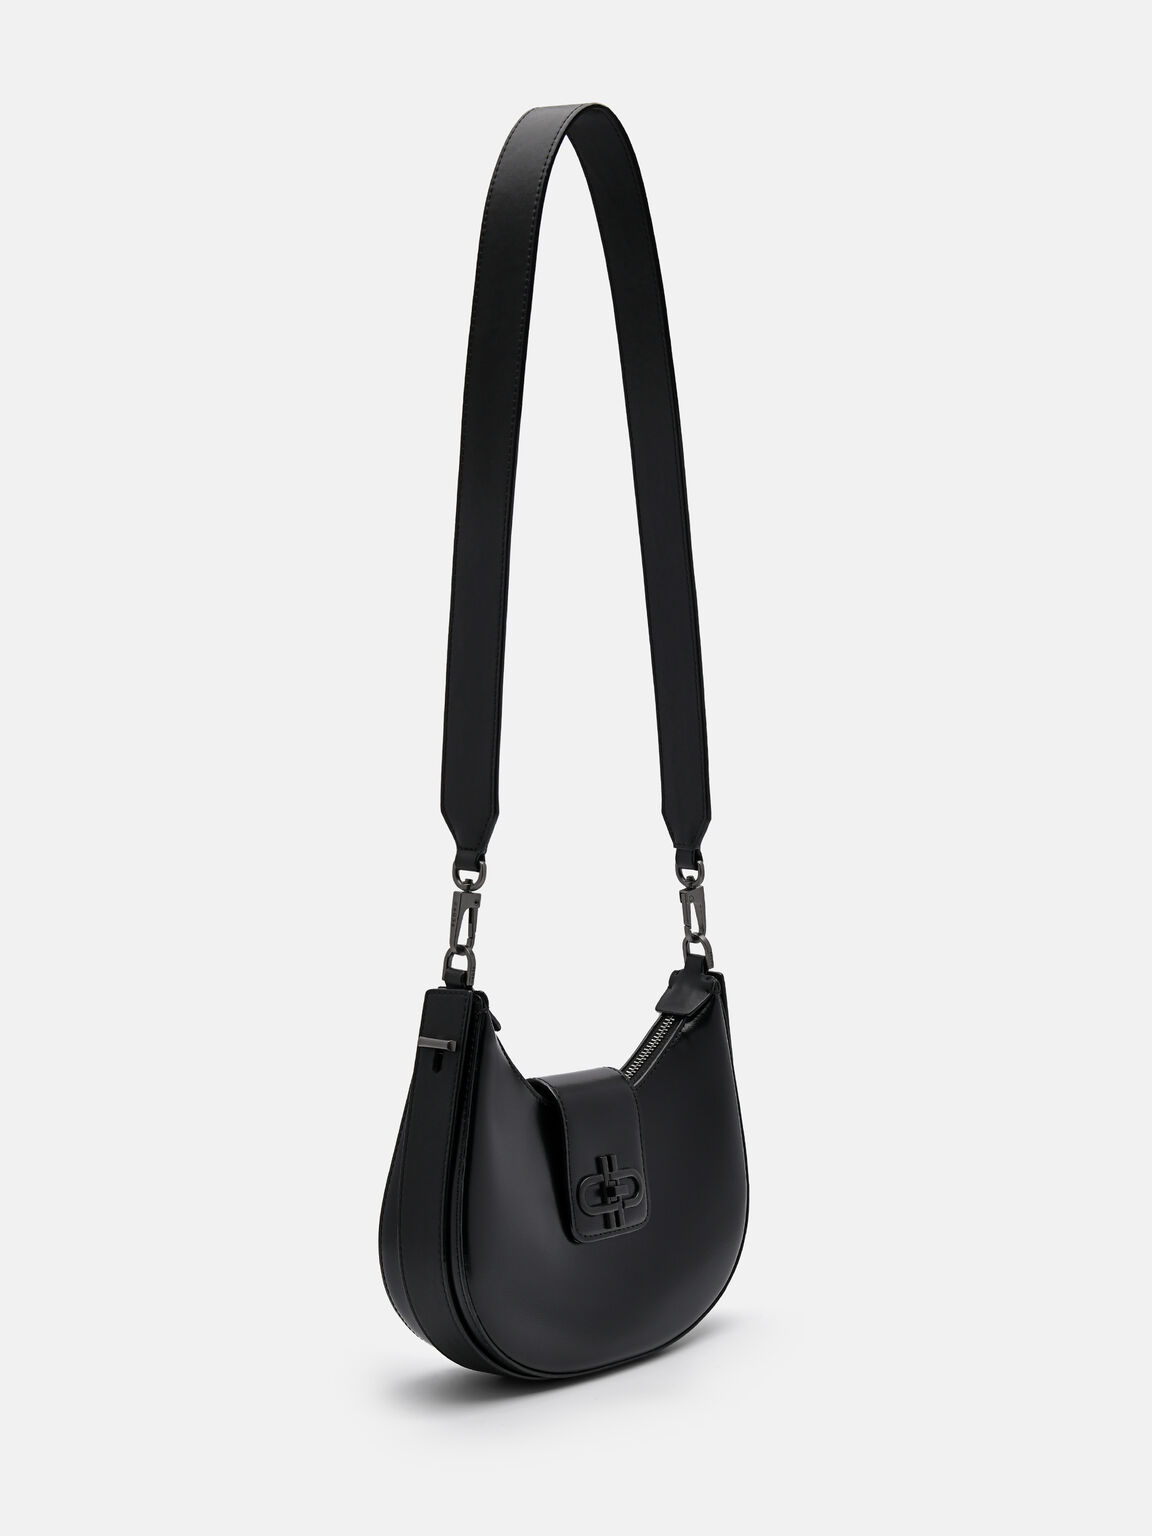 PEDRO Icon Leather Hobo Bag, Black